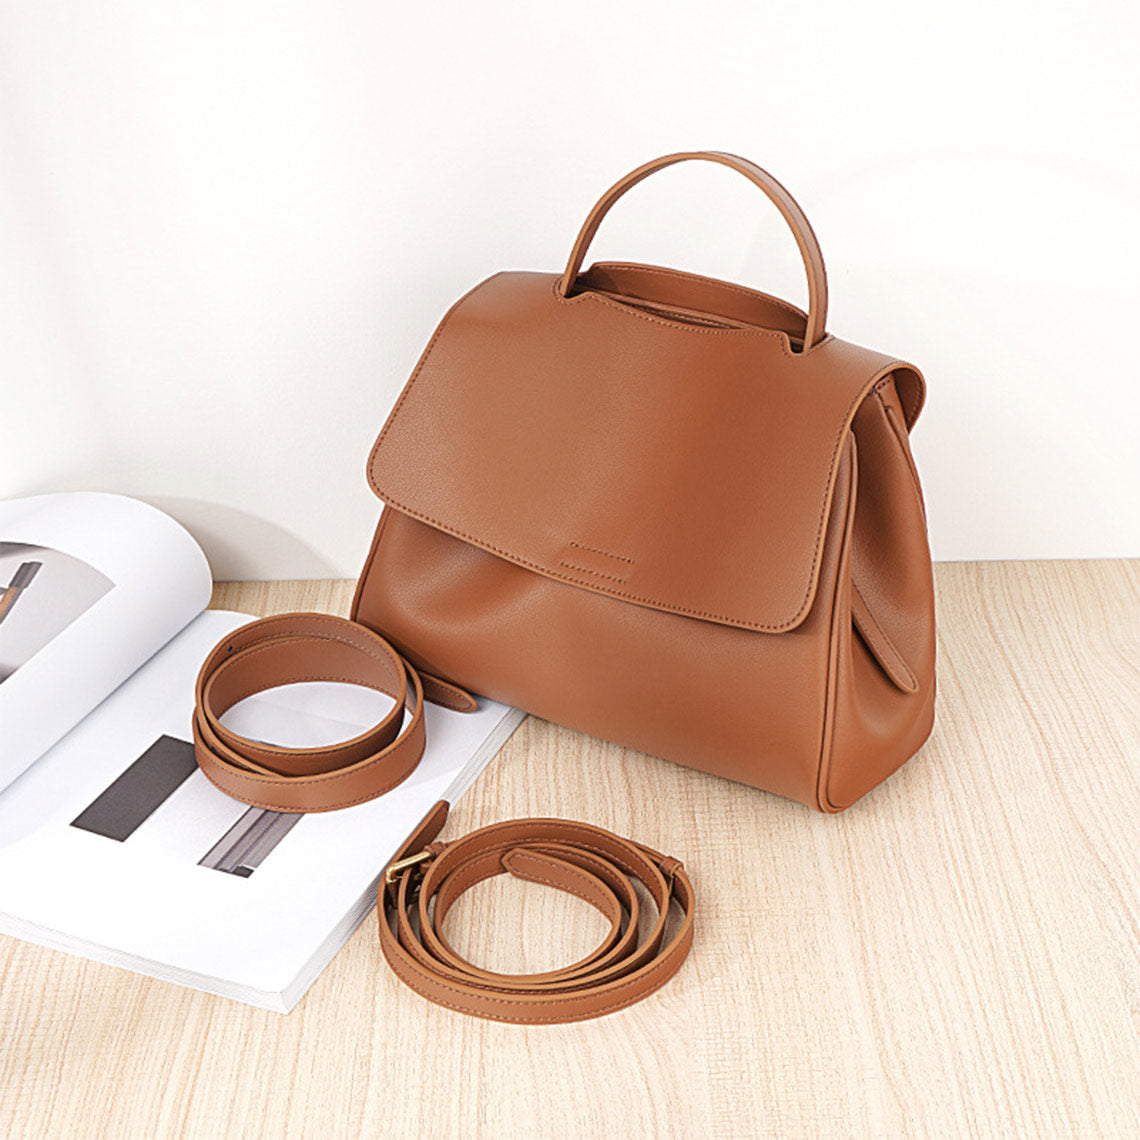 Top Handle Handbags in Brown with Adjustable Strap - POPSEWING™